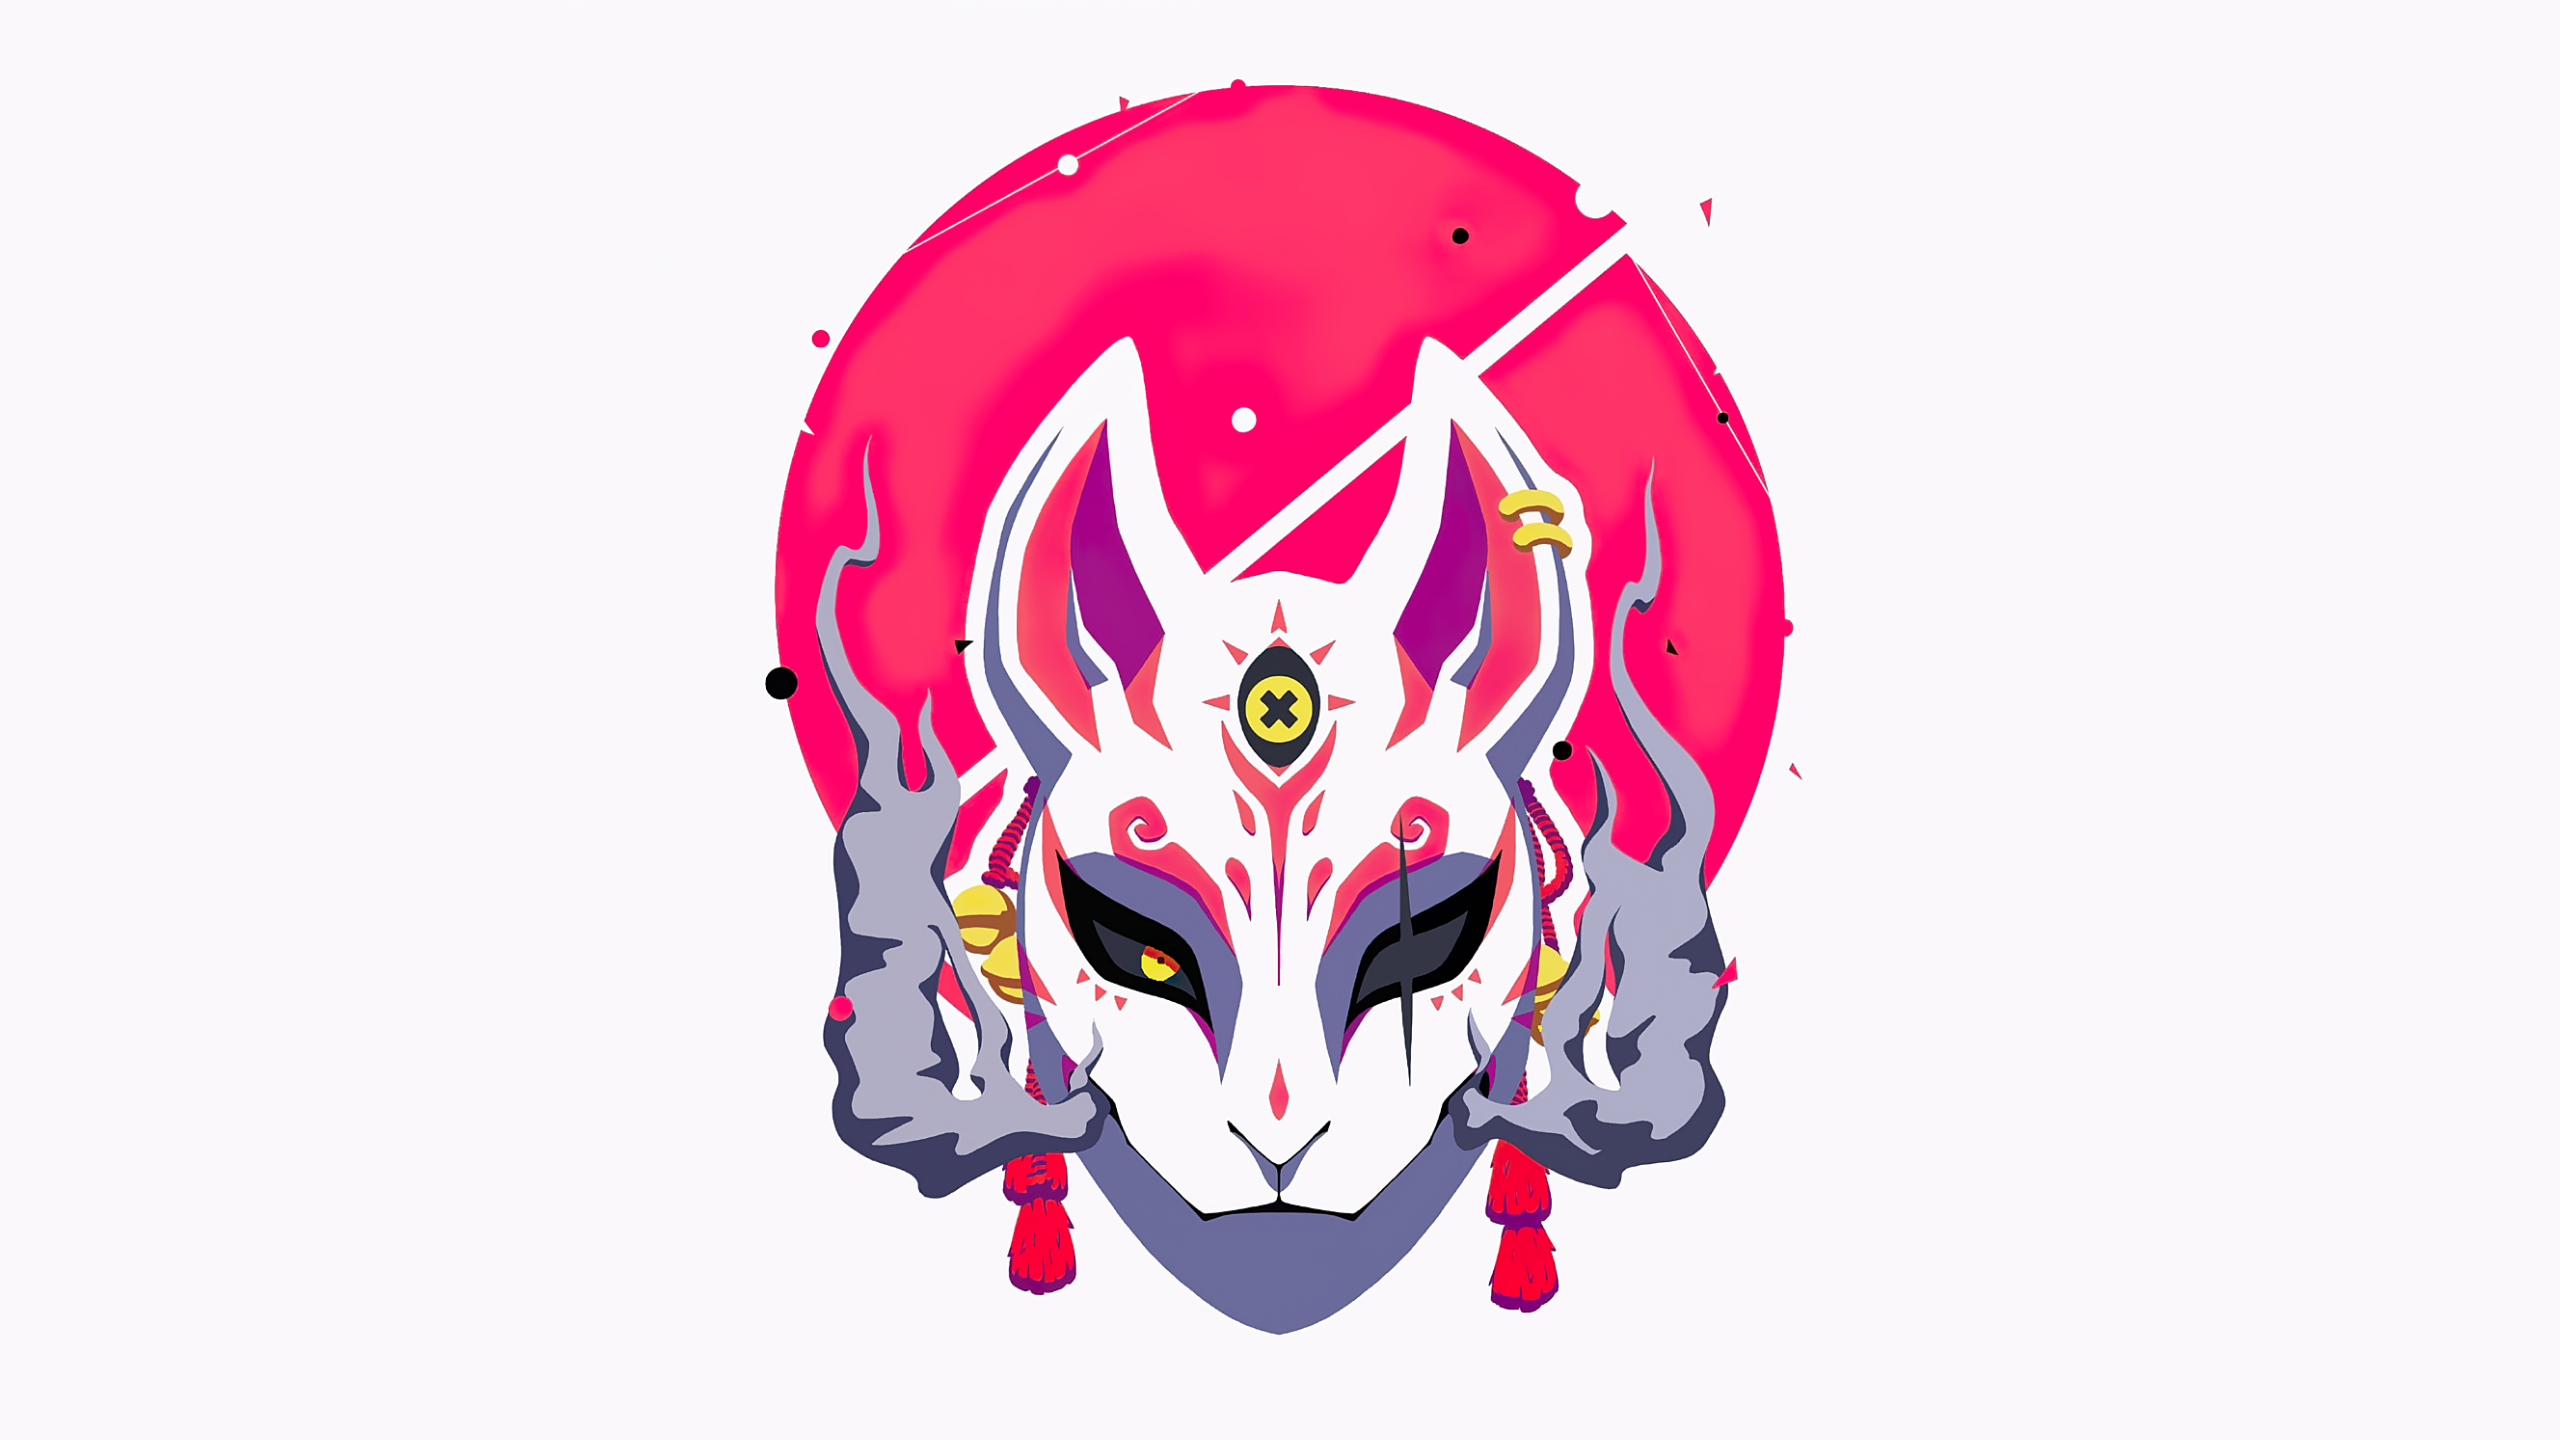 Kitsune Mask by callum clementson